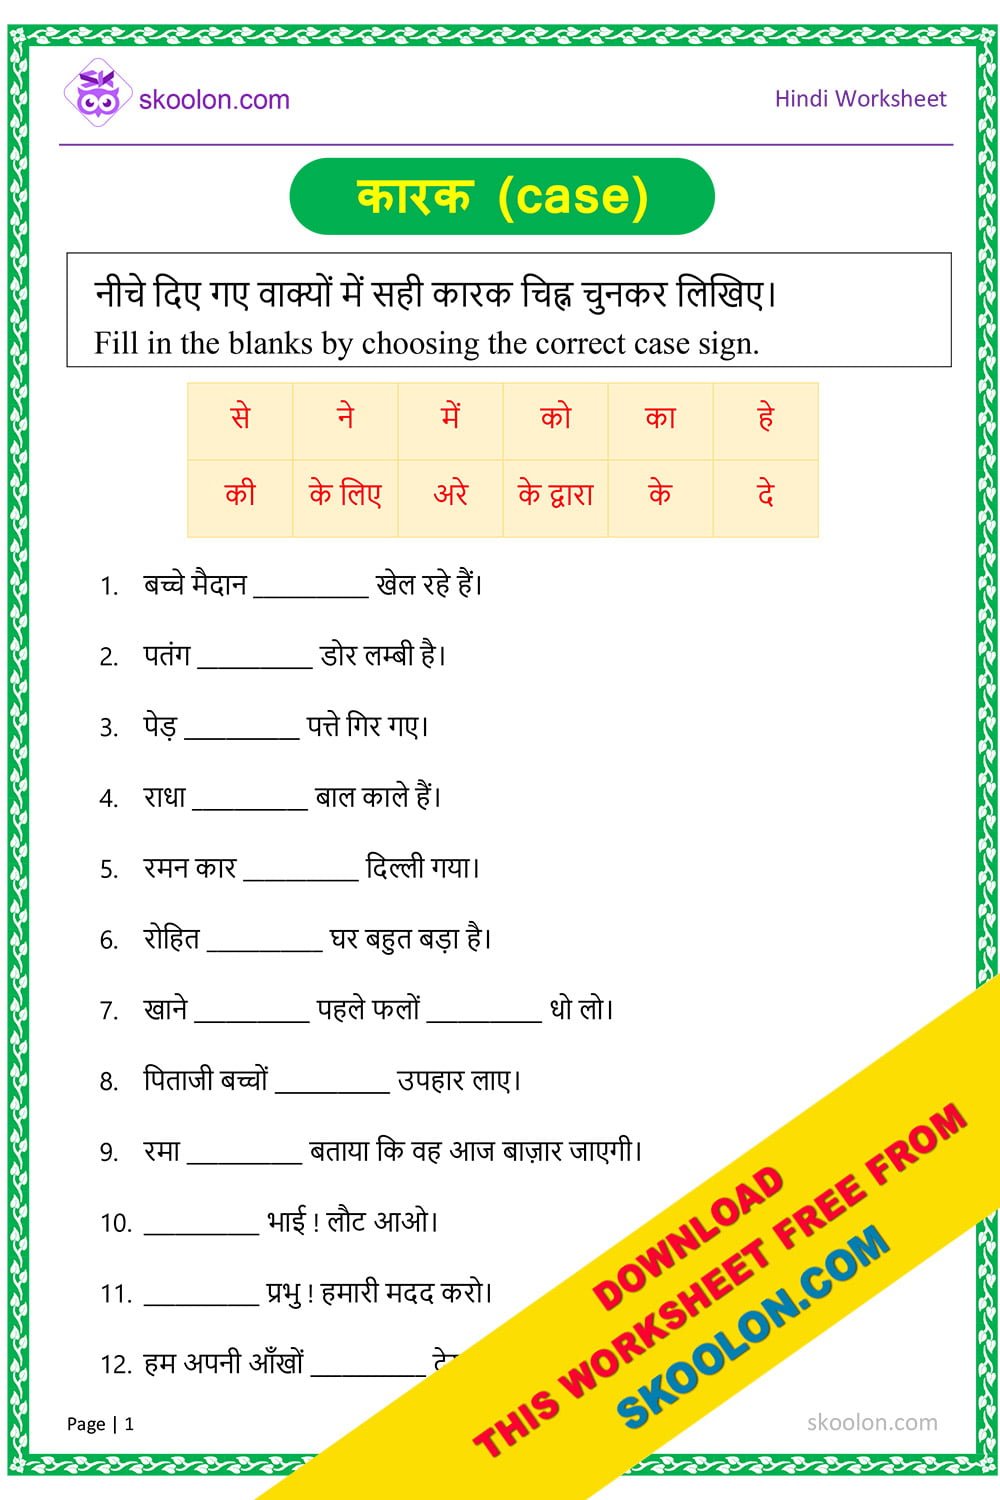 karak-hindi-grammar-worksheet-8-skoolon